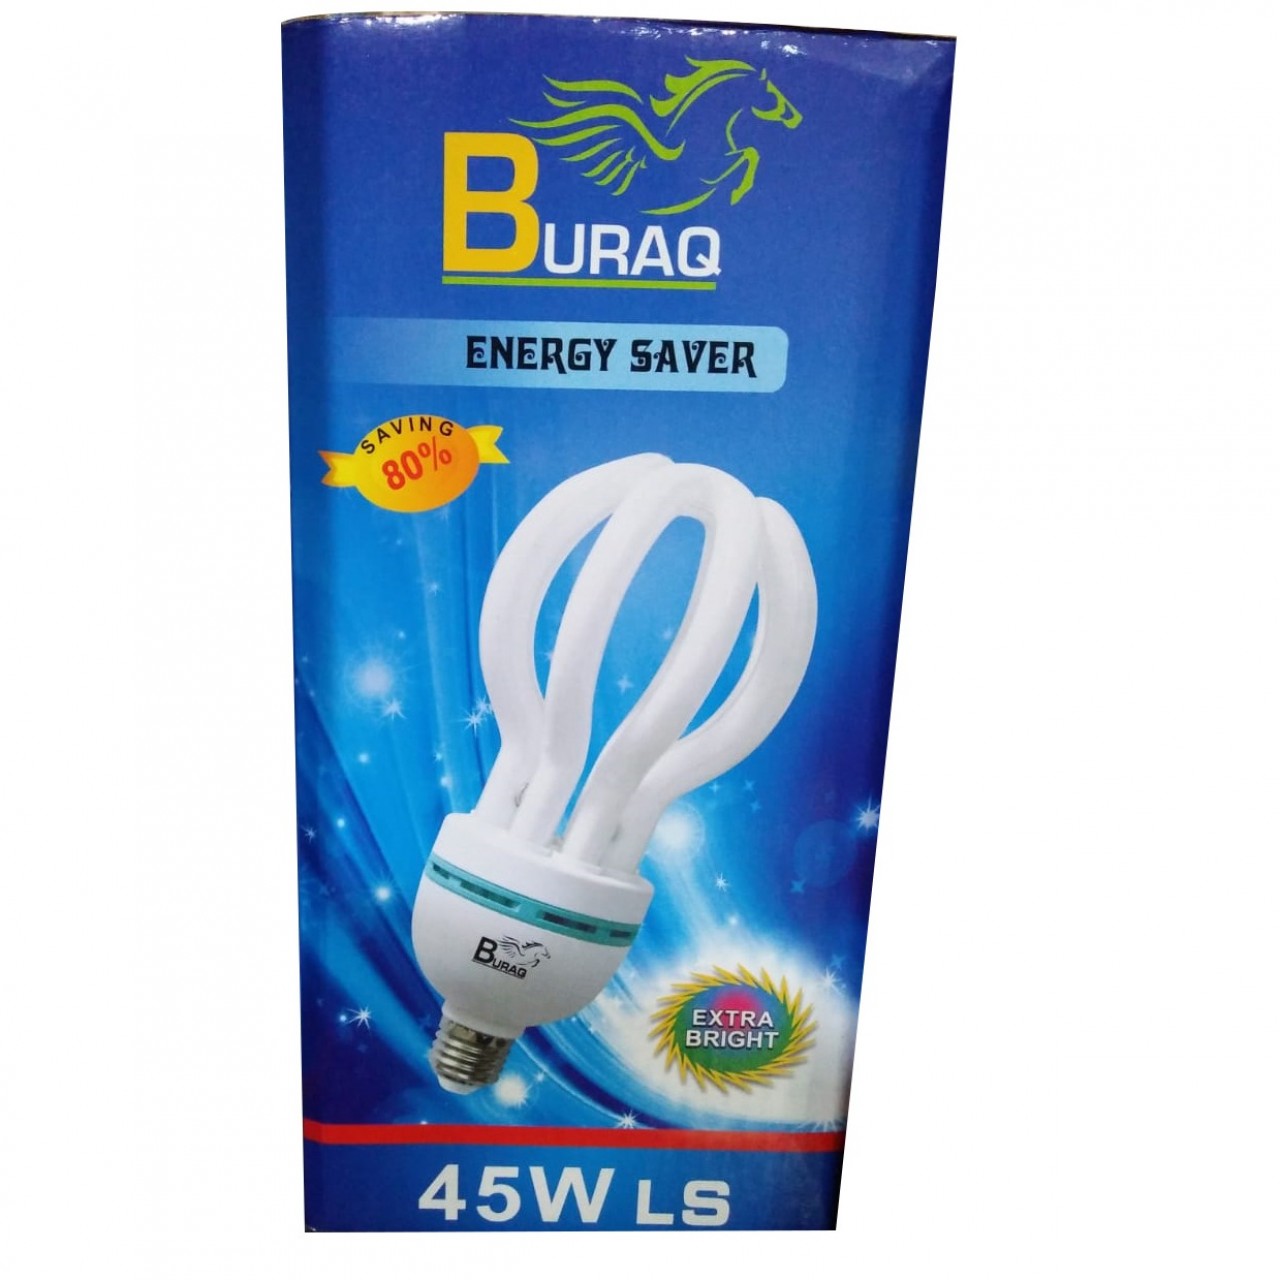 Buraq Lotus Extra Bright Energy Saver - 45W LS